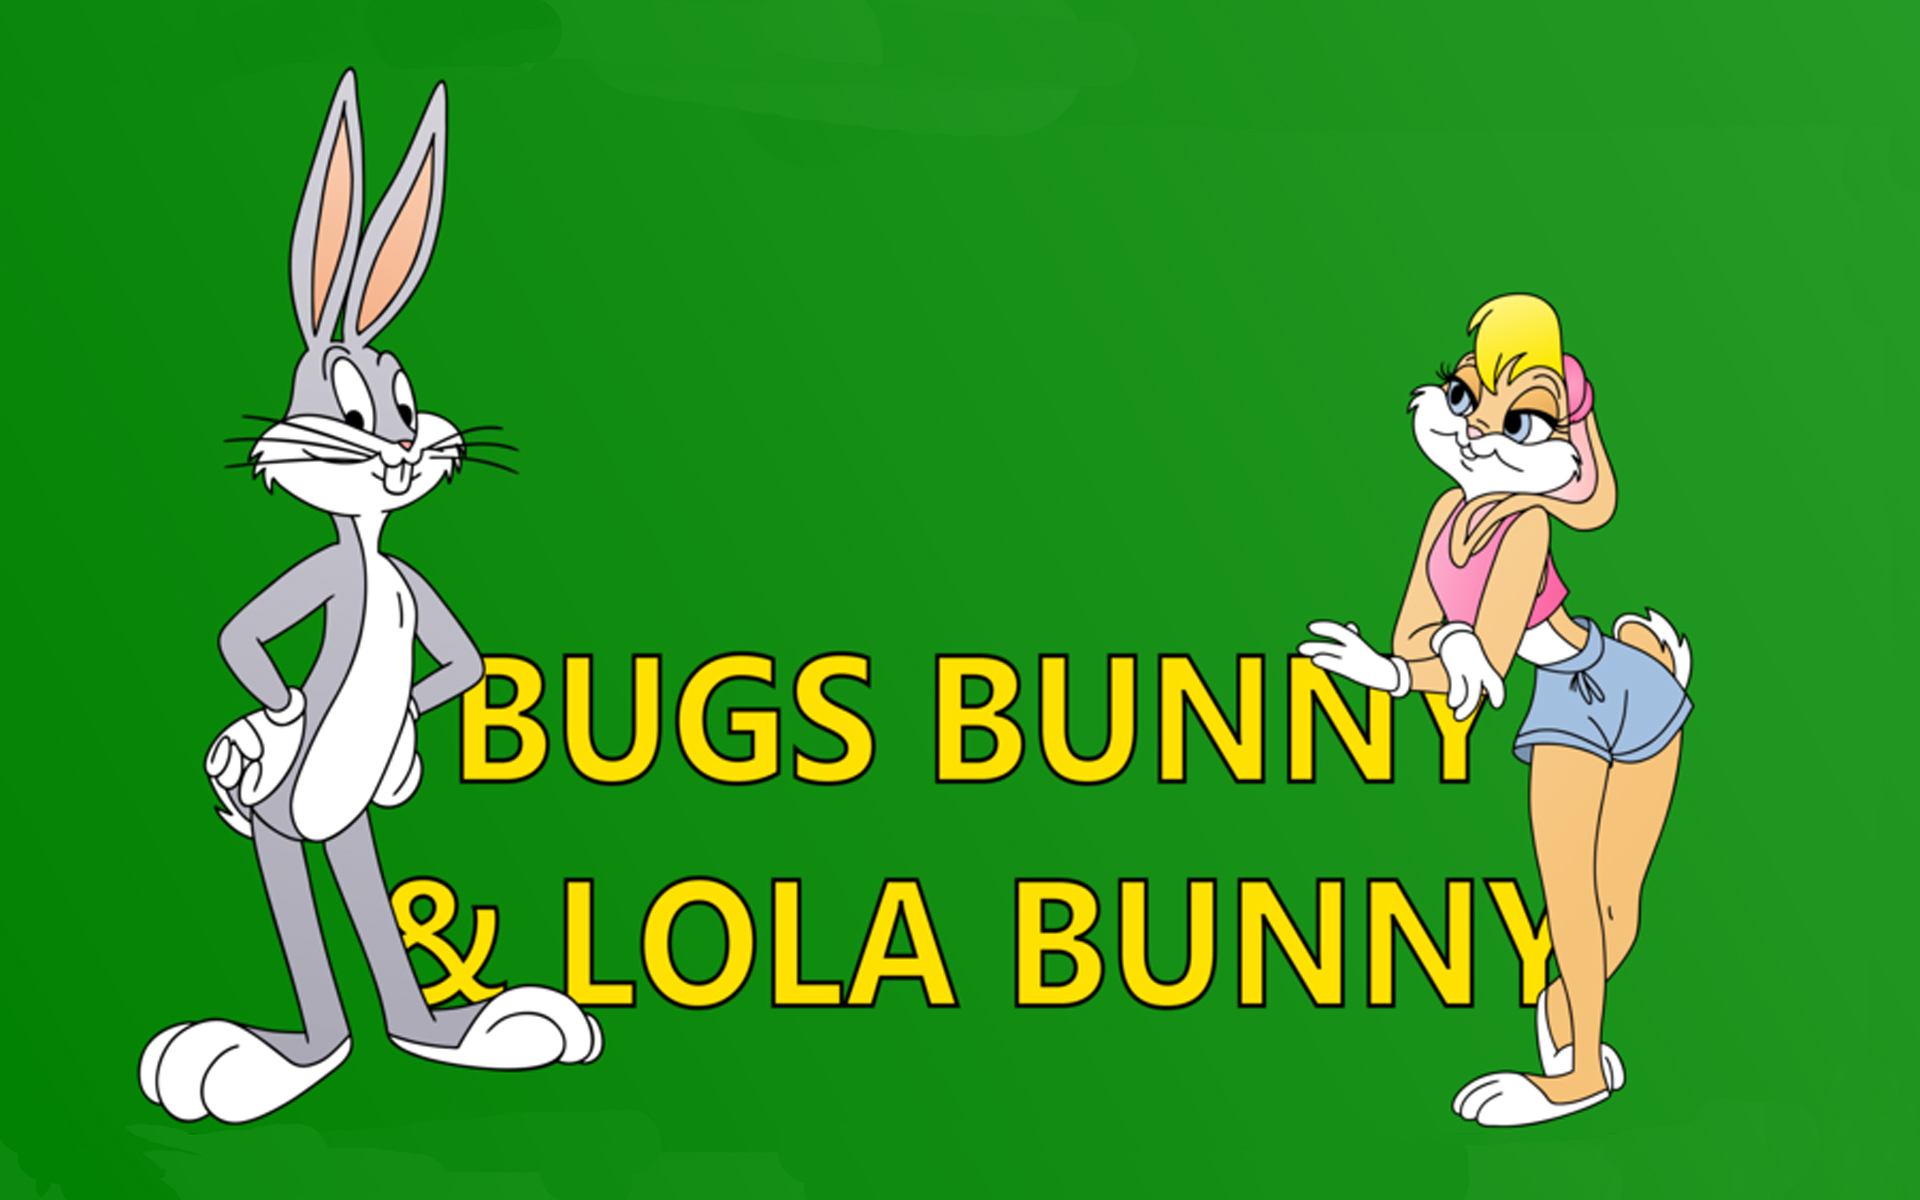 Bugs Bunny And Lola Bunny Desktop Backgrounds 1920x1200